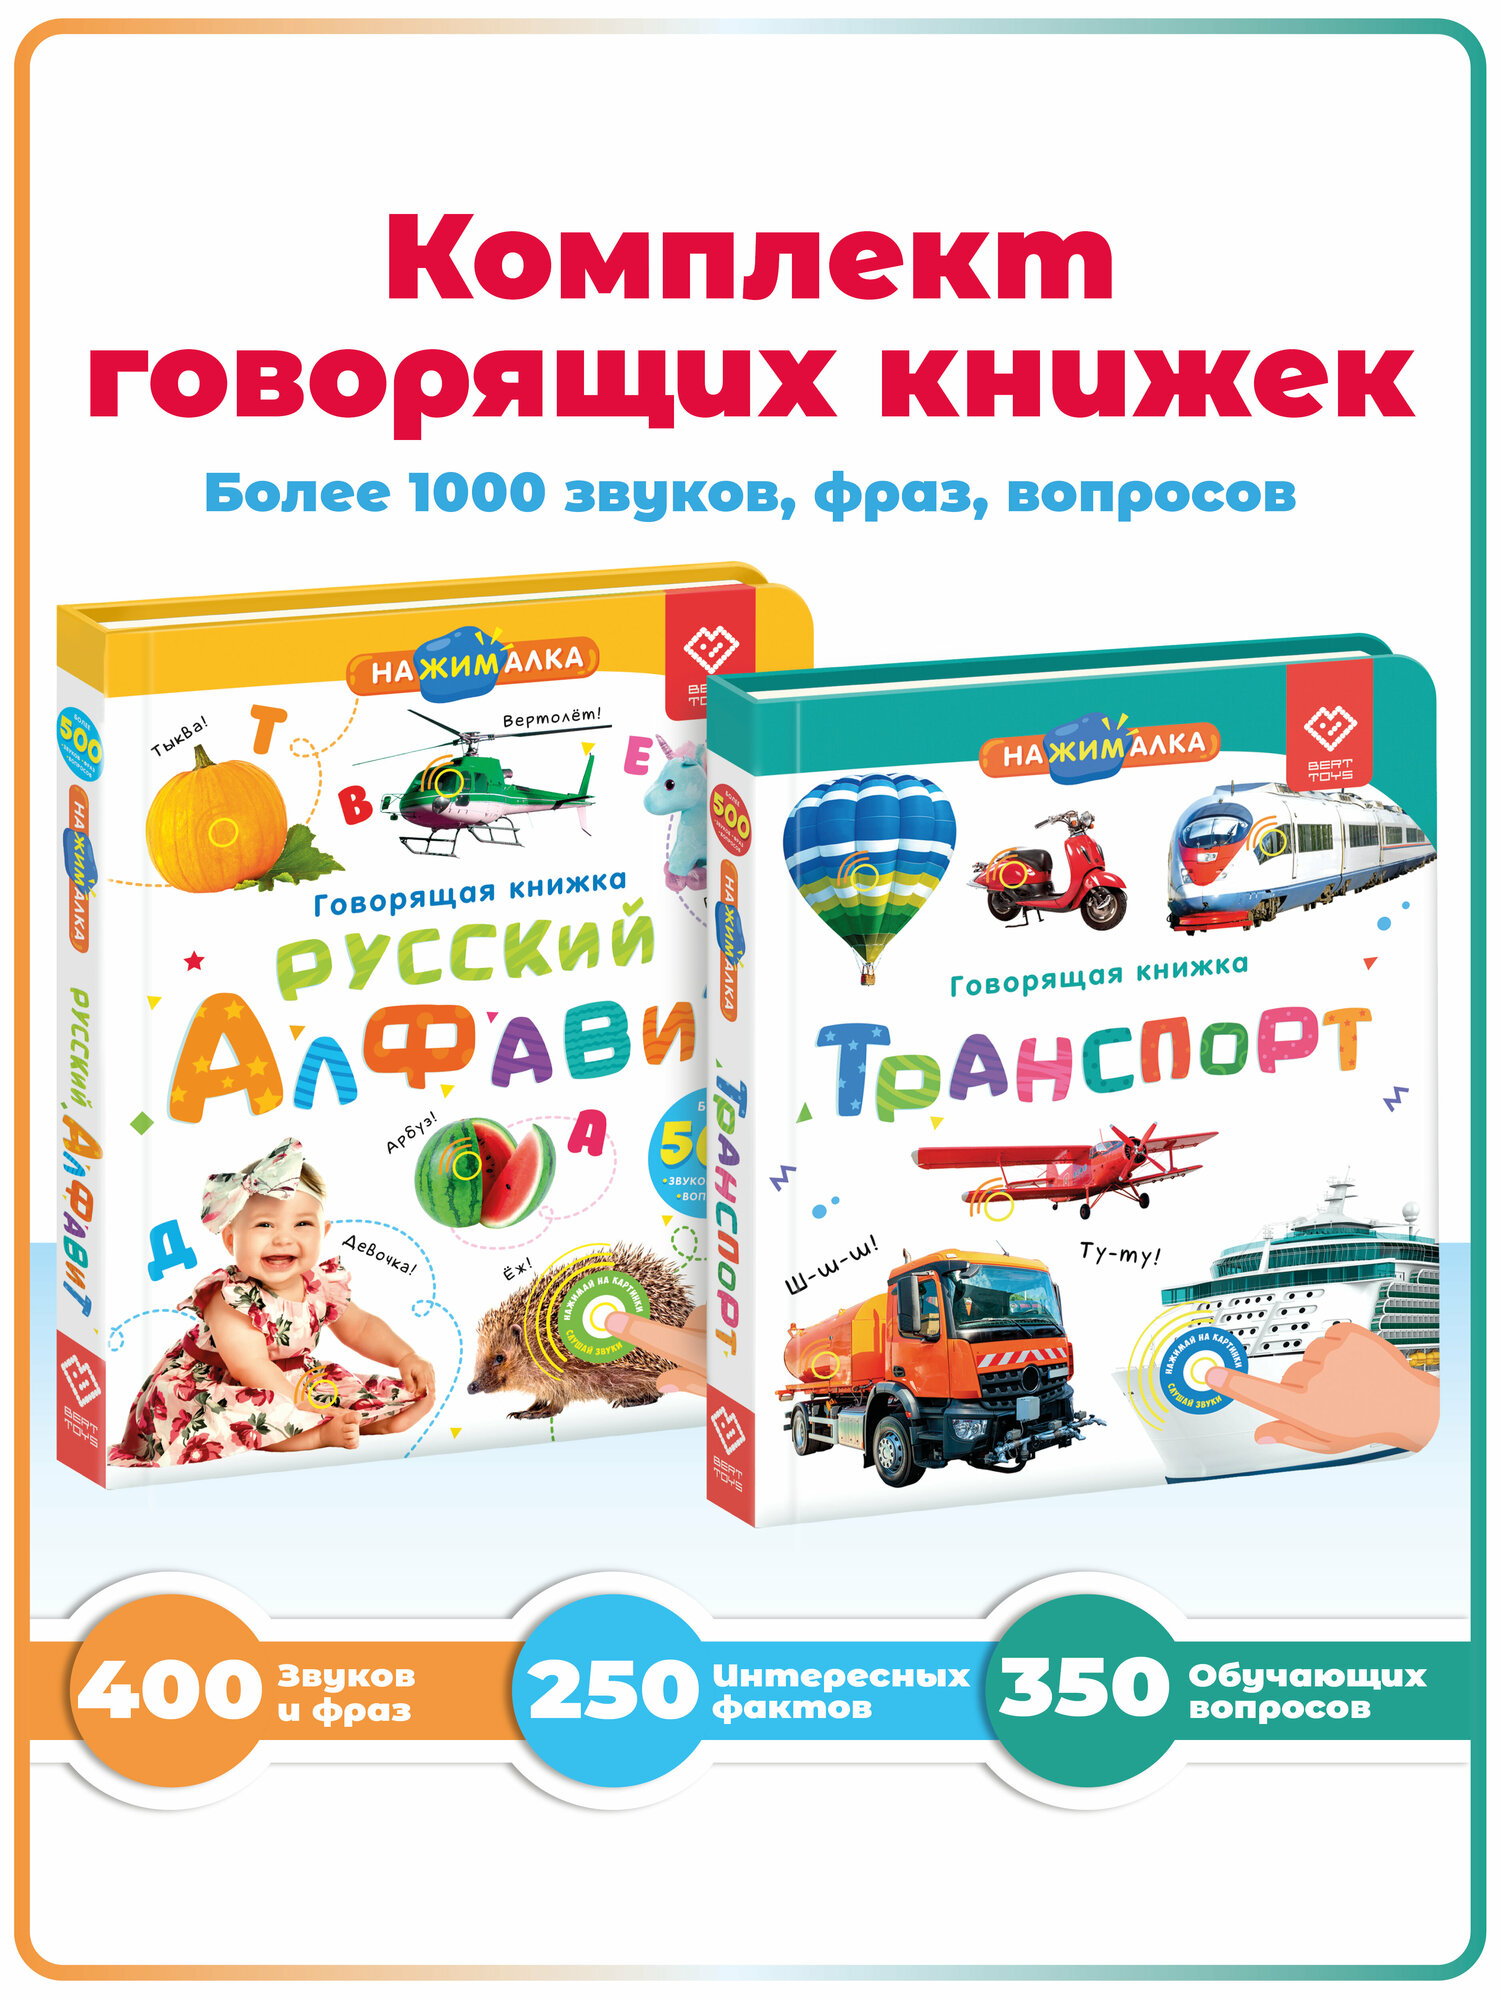 2в1 Говорящая книга Нажималка Транспорт + Русский алфавит